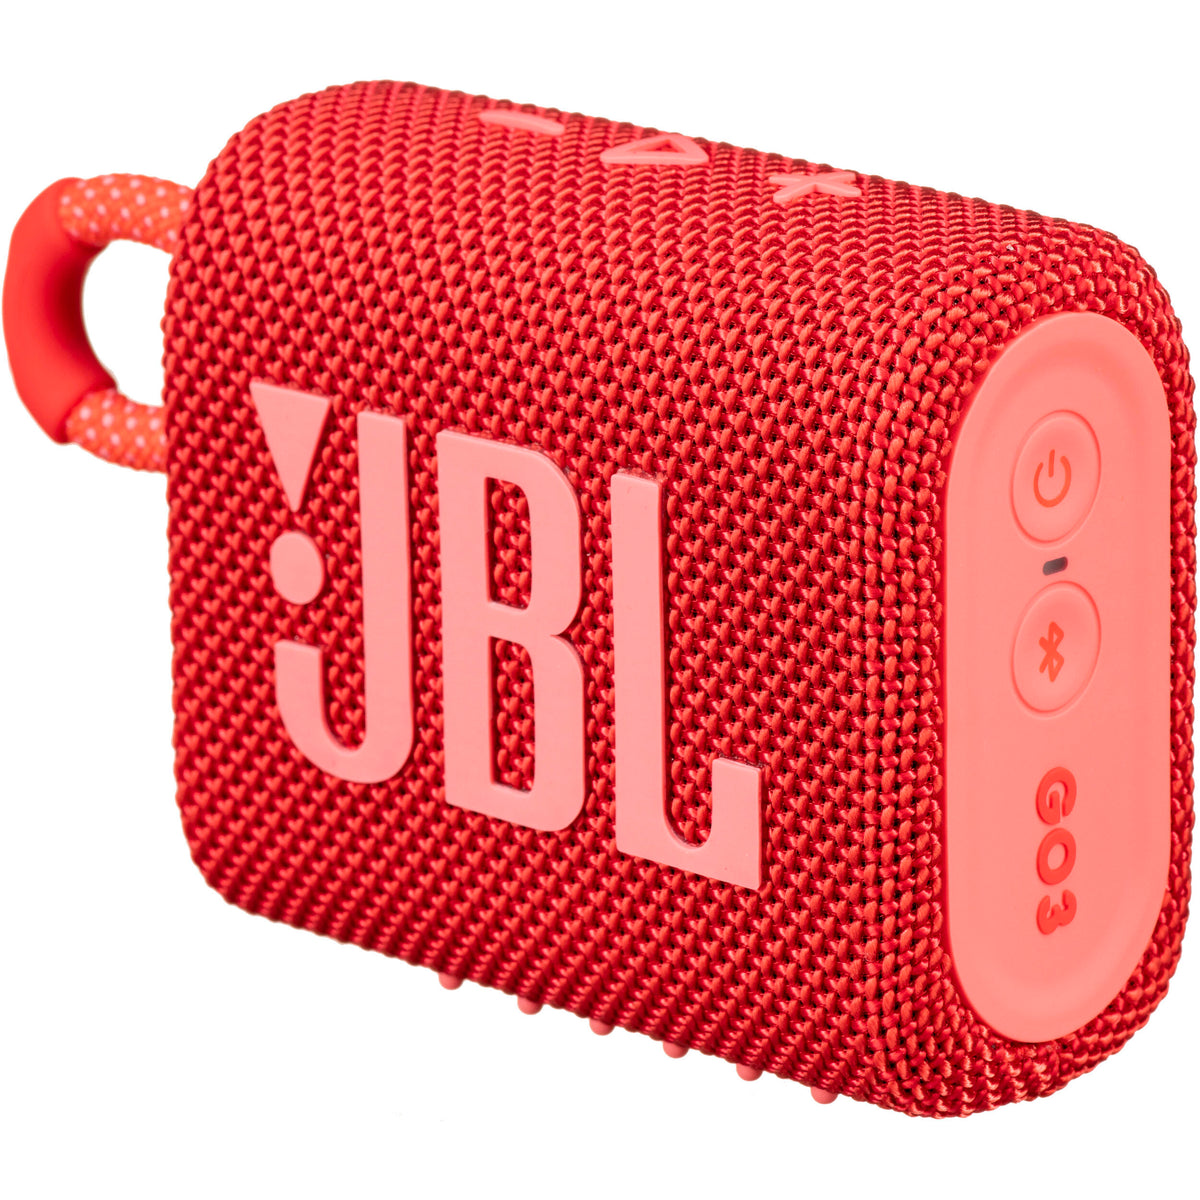 JBL Go 3 Bocina inalámbrica Bluetooth portátil, IP67 resistente al agua